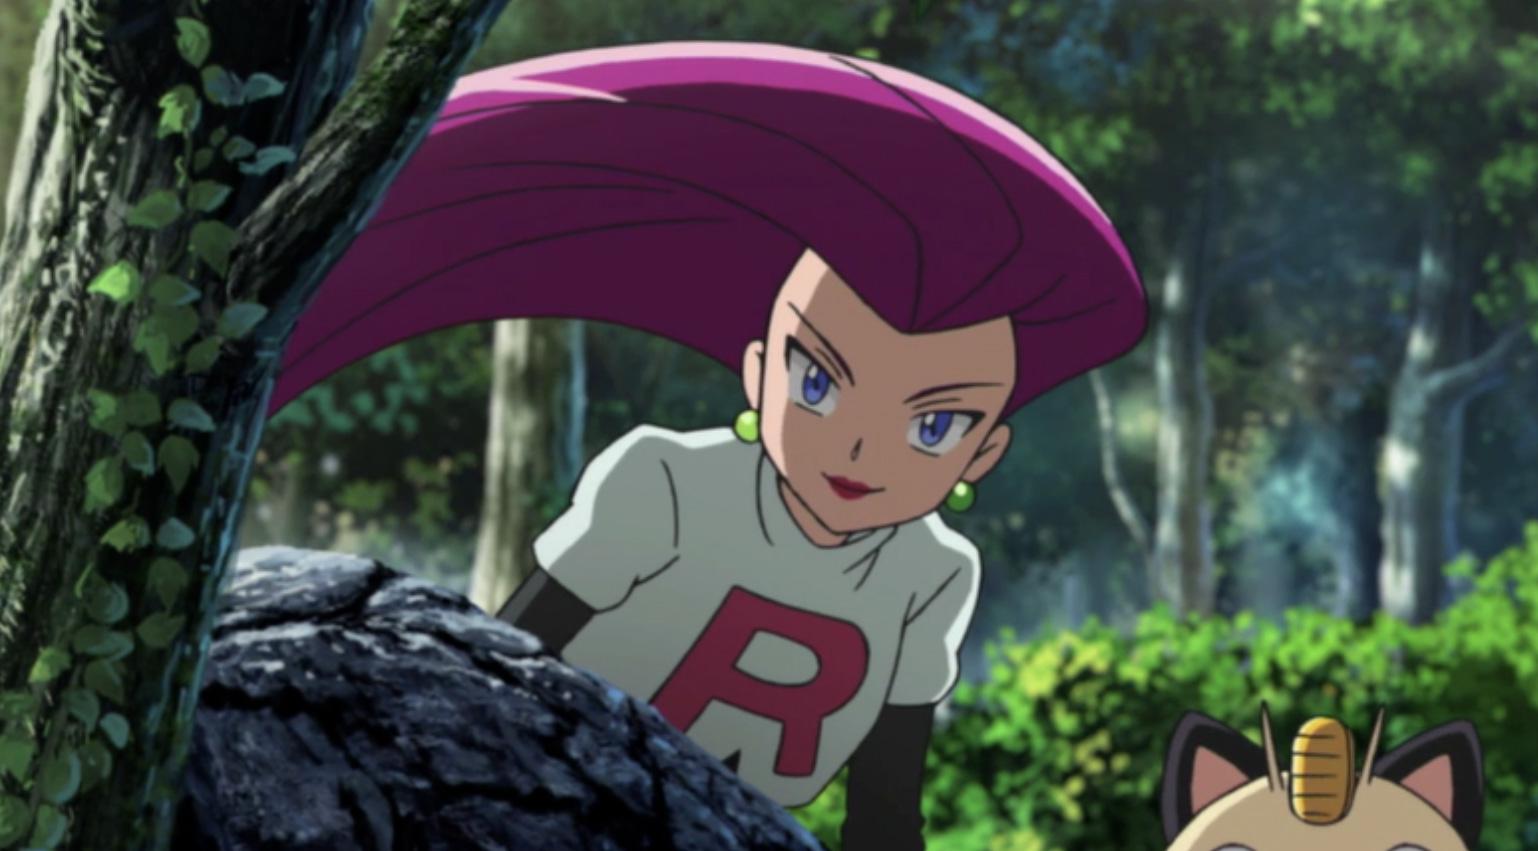 Screenshot of Team Rocket's Jessie in Pokemon anime.